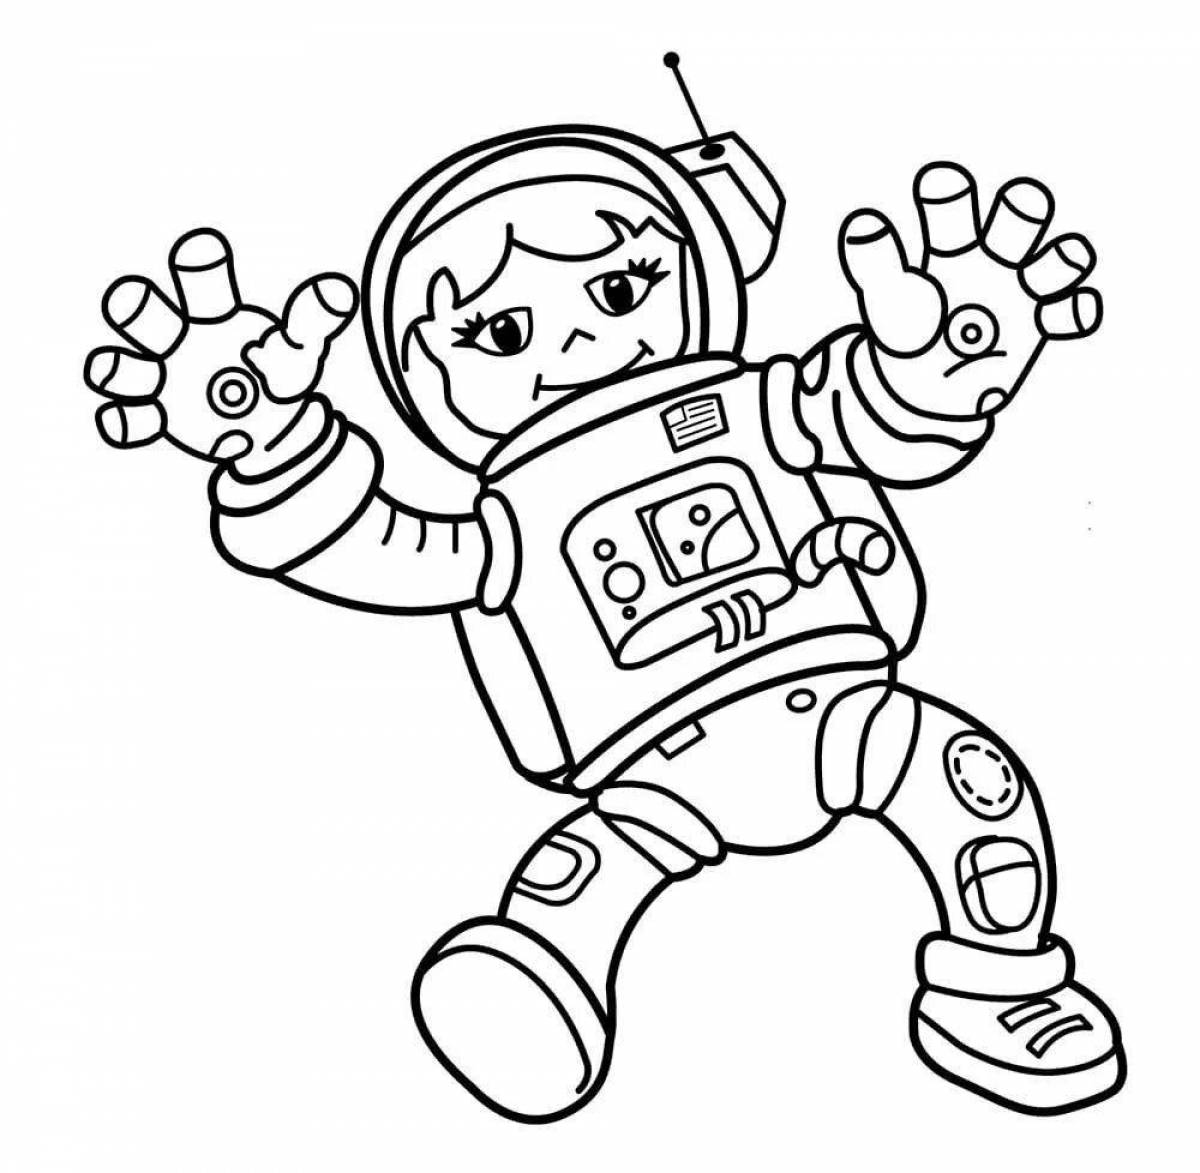 Beckoning spacesuit astronaut